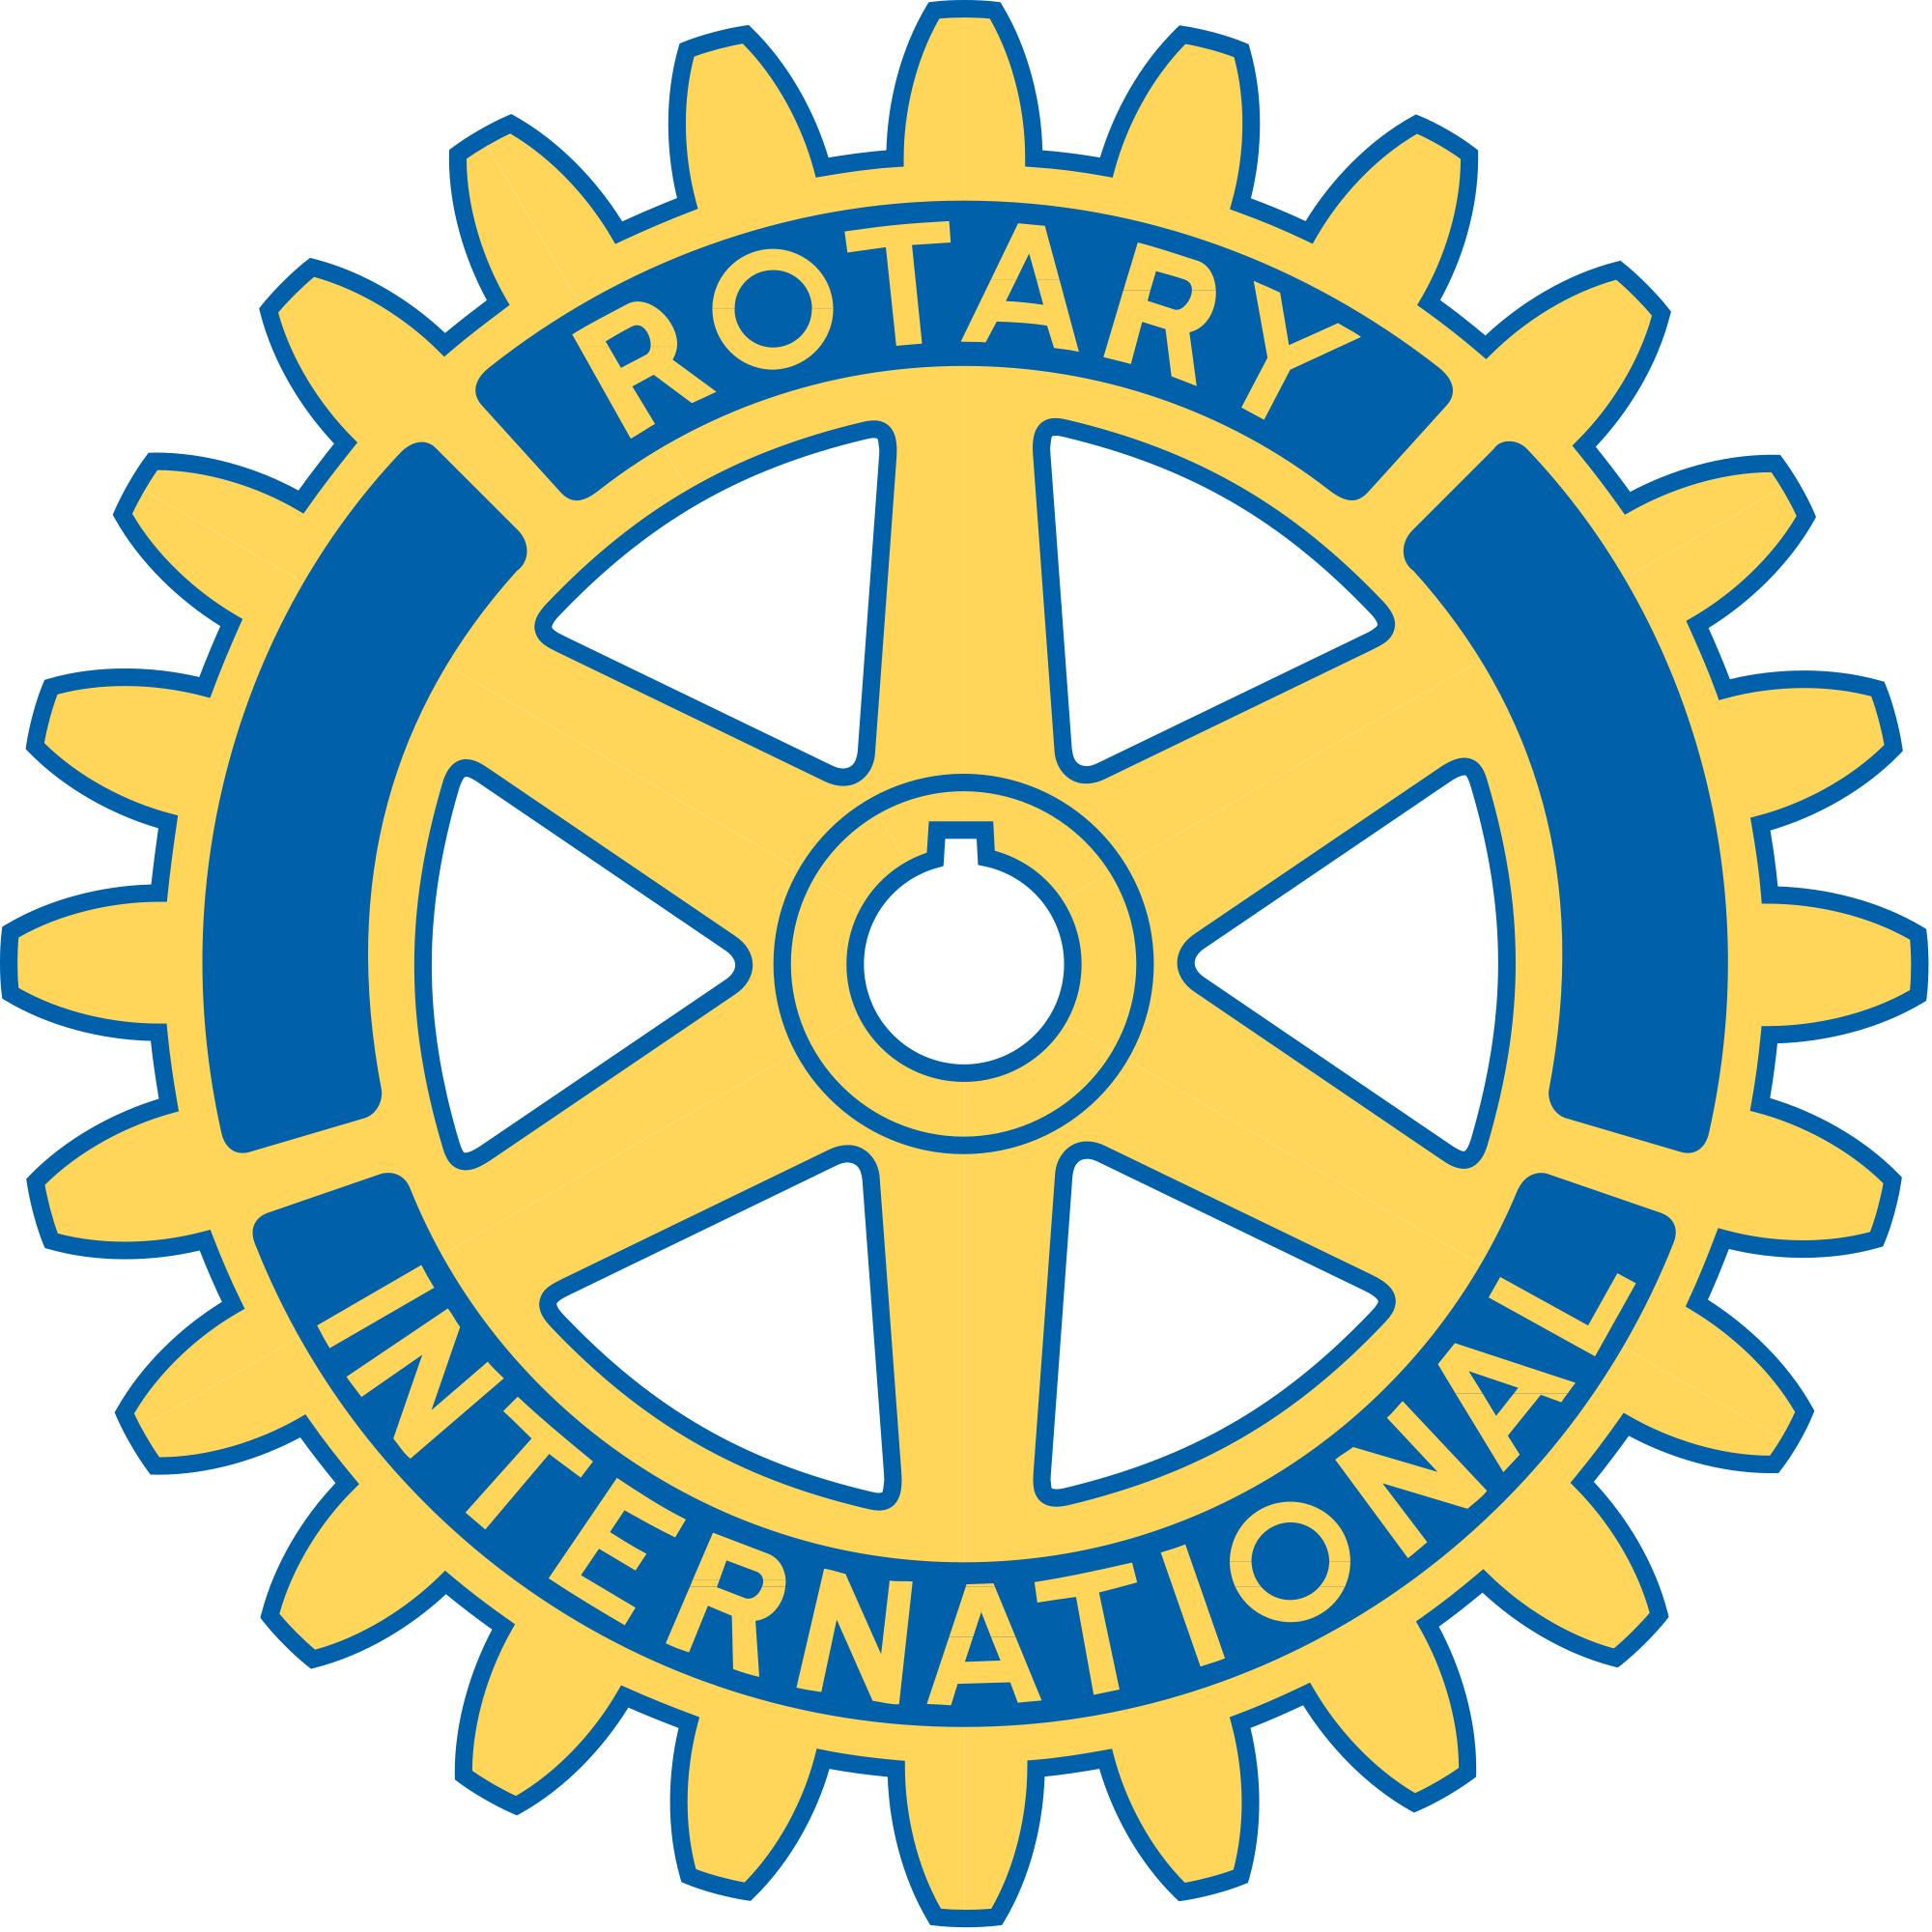 2000px-Rotary_international_emblem.png